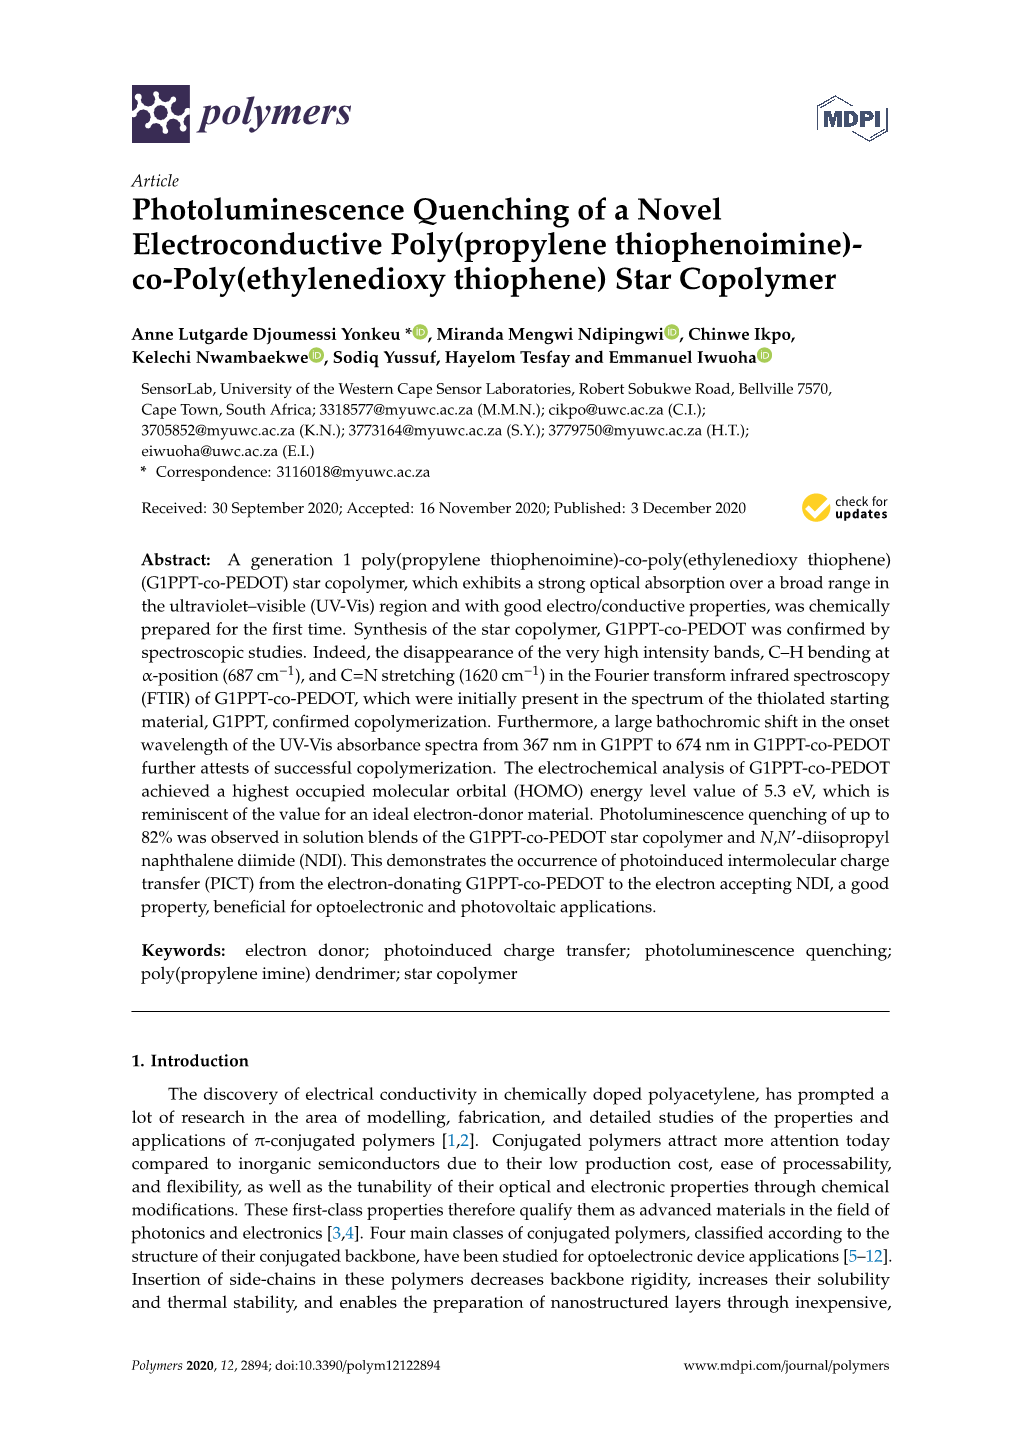 Photoluminescence Quenching of a Novel Electroconductive Poly(Propylene Thiophenoimine)- Co-Poly(Ethylenedioxy Thiophene) Star Copolymer